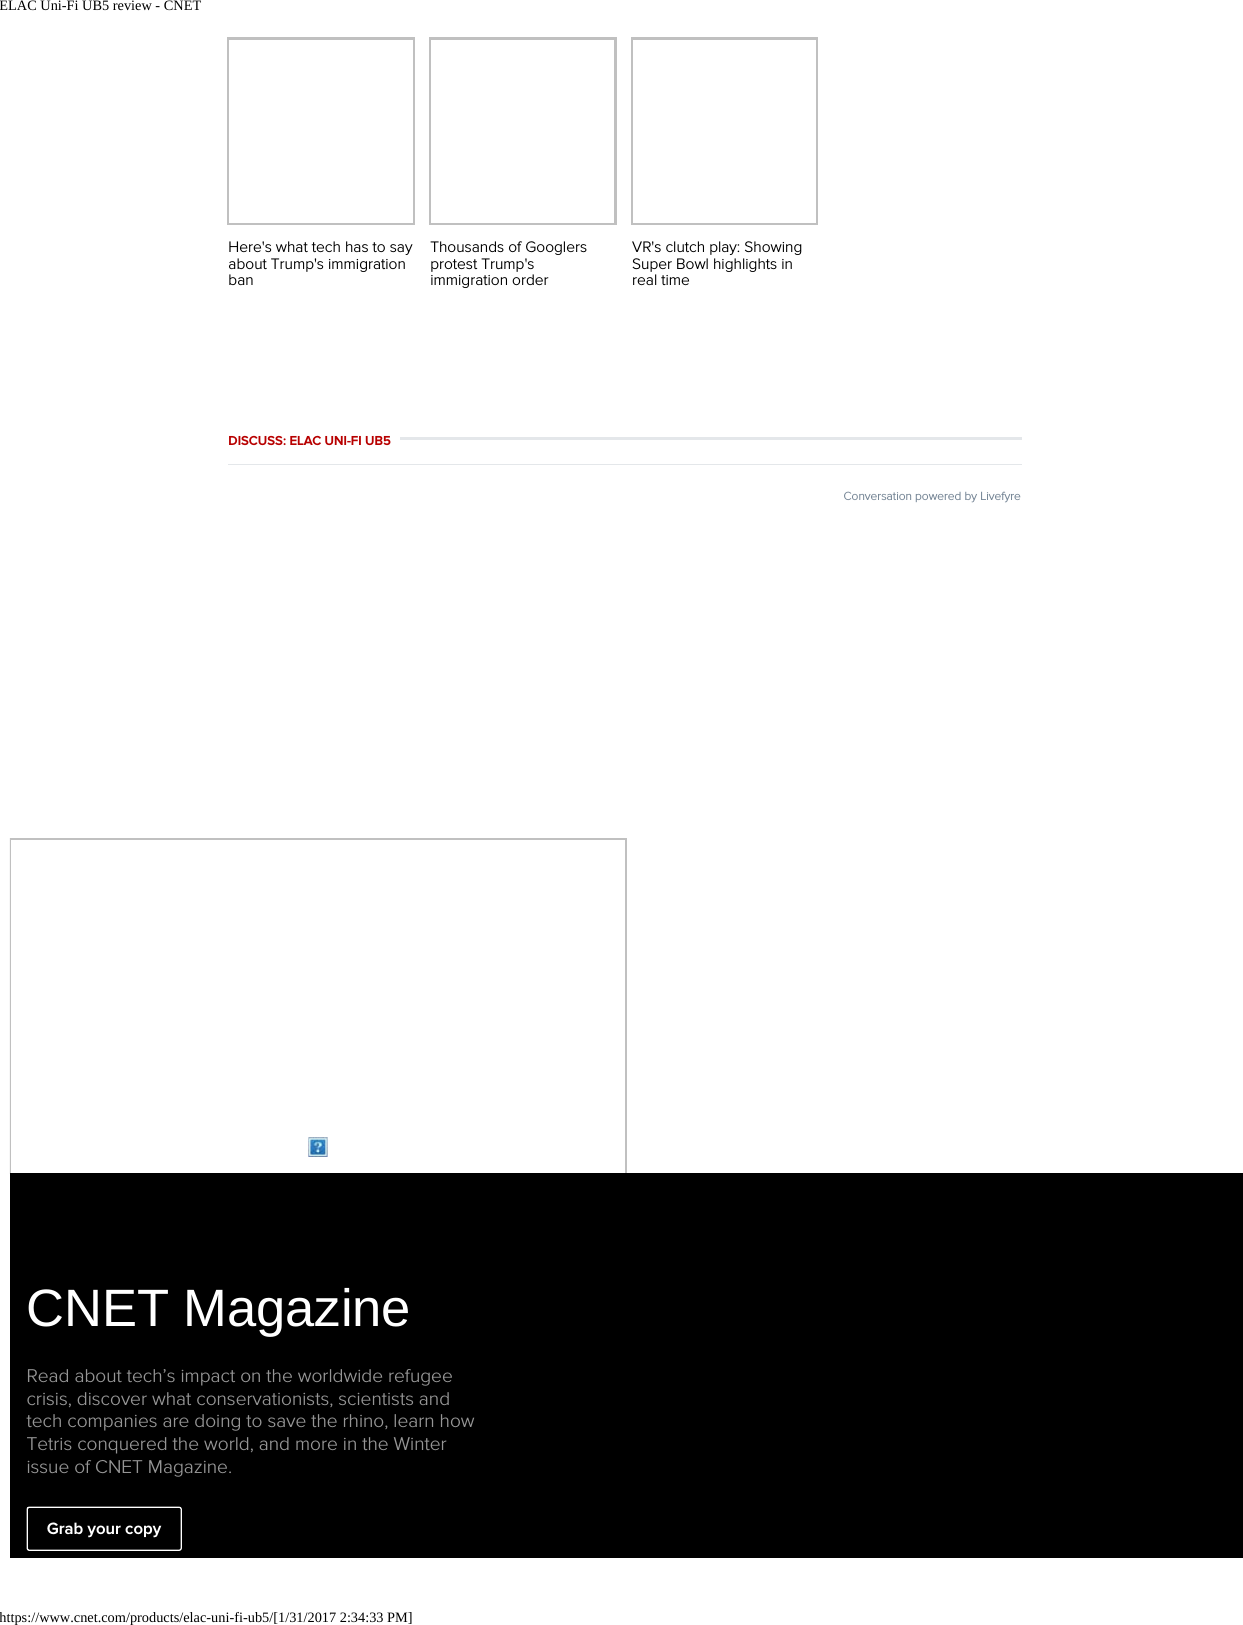 Page 7 of 9 - Elac 2016 5-Elac-Uni-Fi-Ub5-Review-Cnet Uni-Fi UB5 Review - CNET User Manual